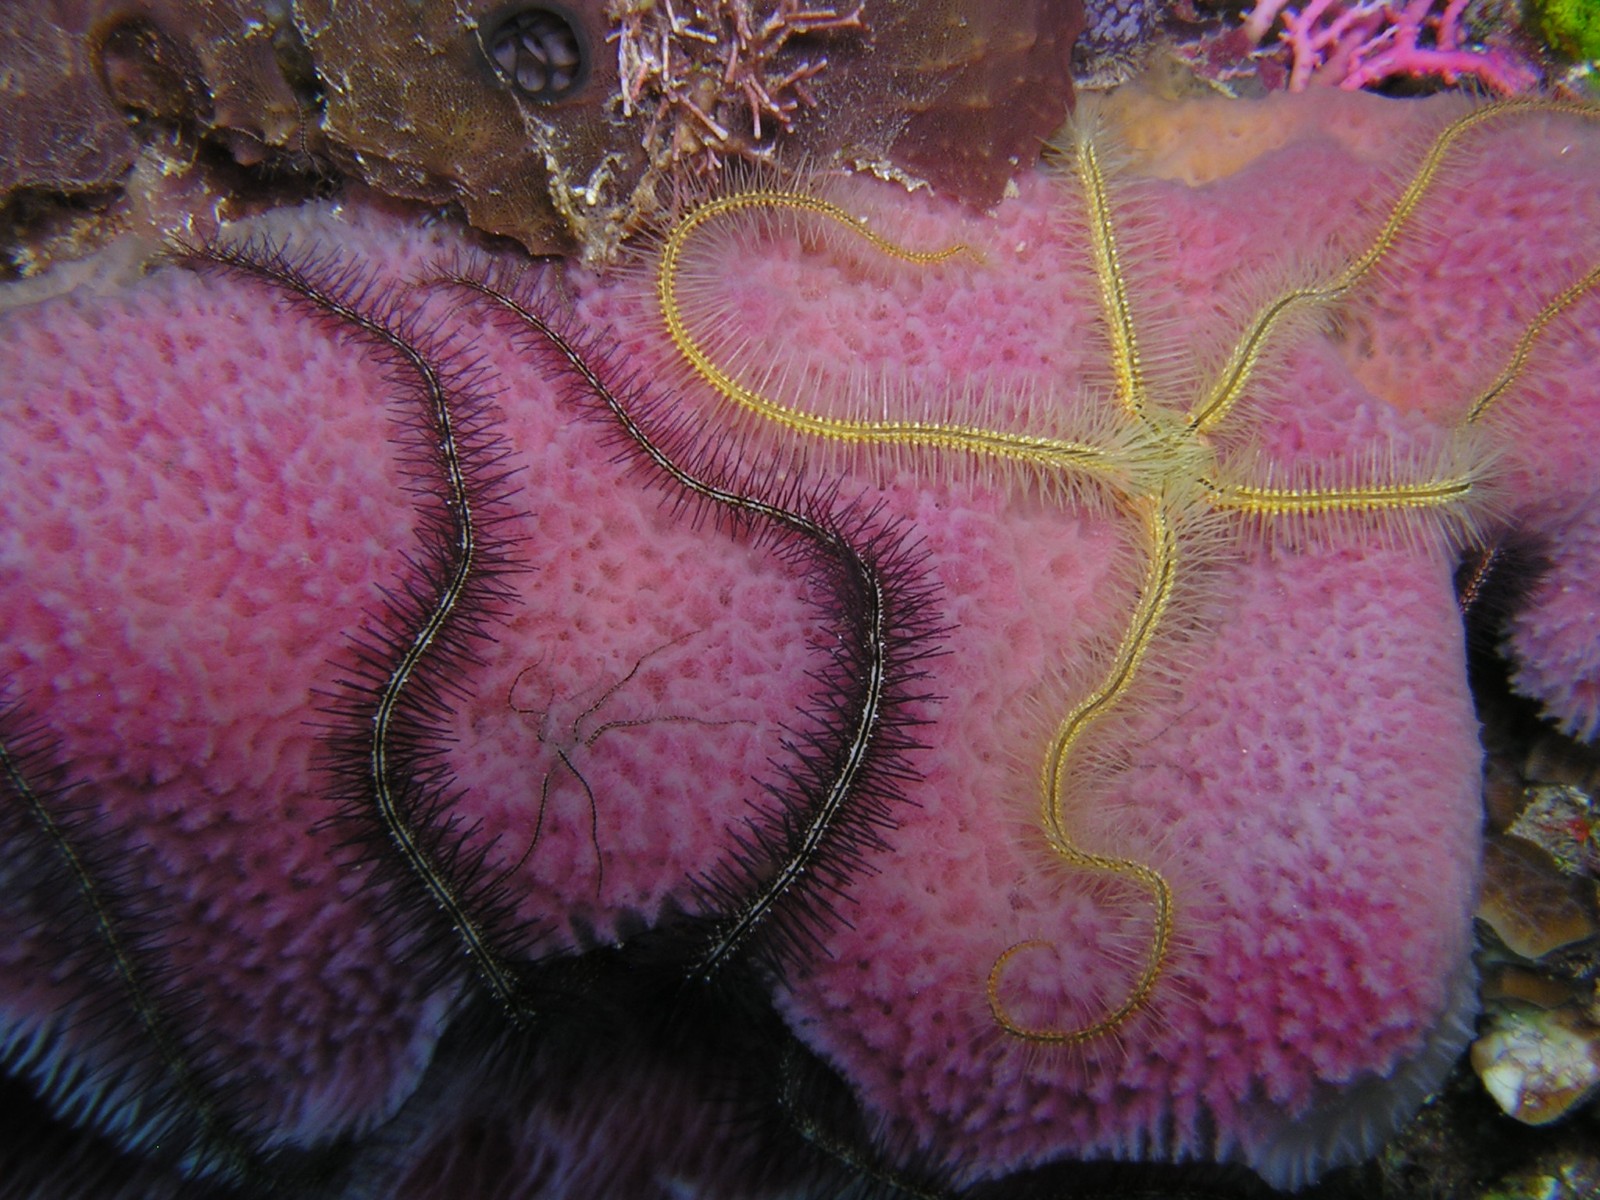 brittle starfish on a vase sponge